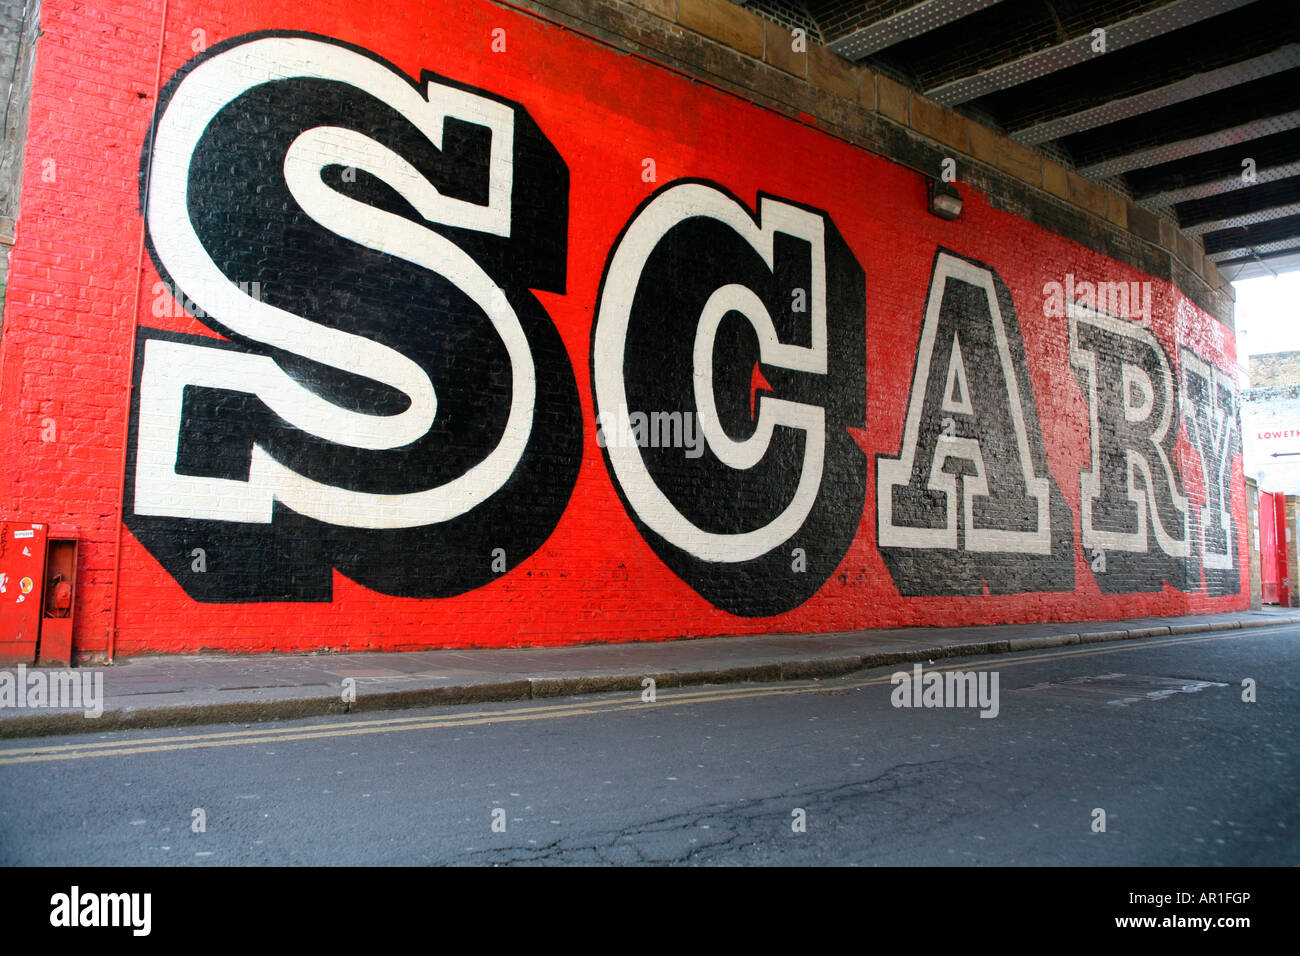 Eine SCARY mural en la pared cerca de la carga, Shoreditch, Londres Foto de stock